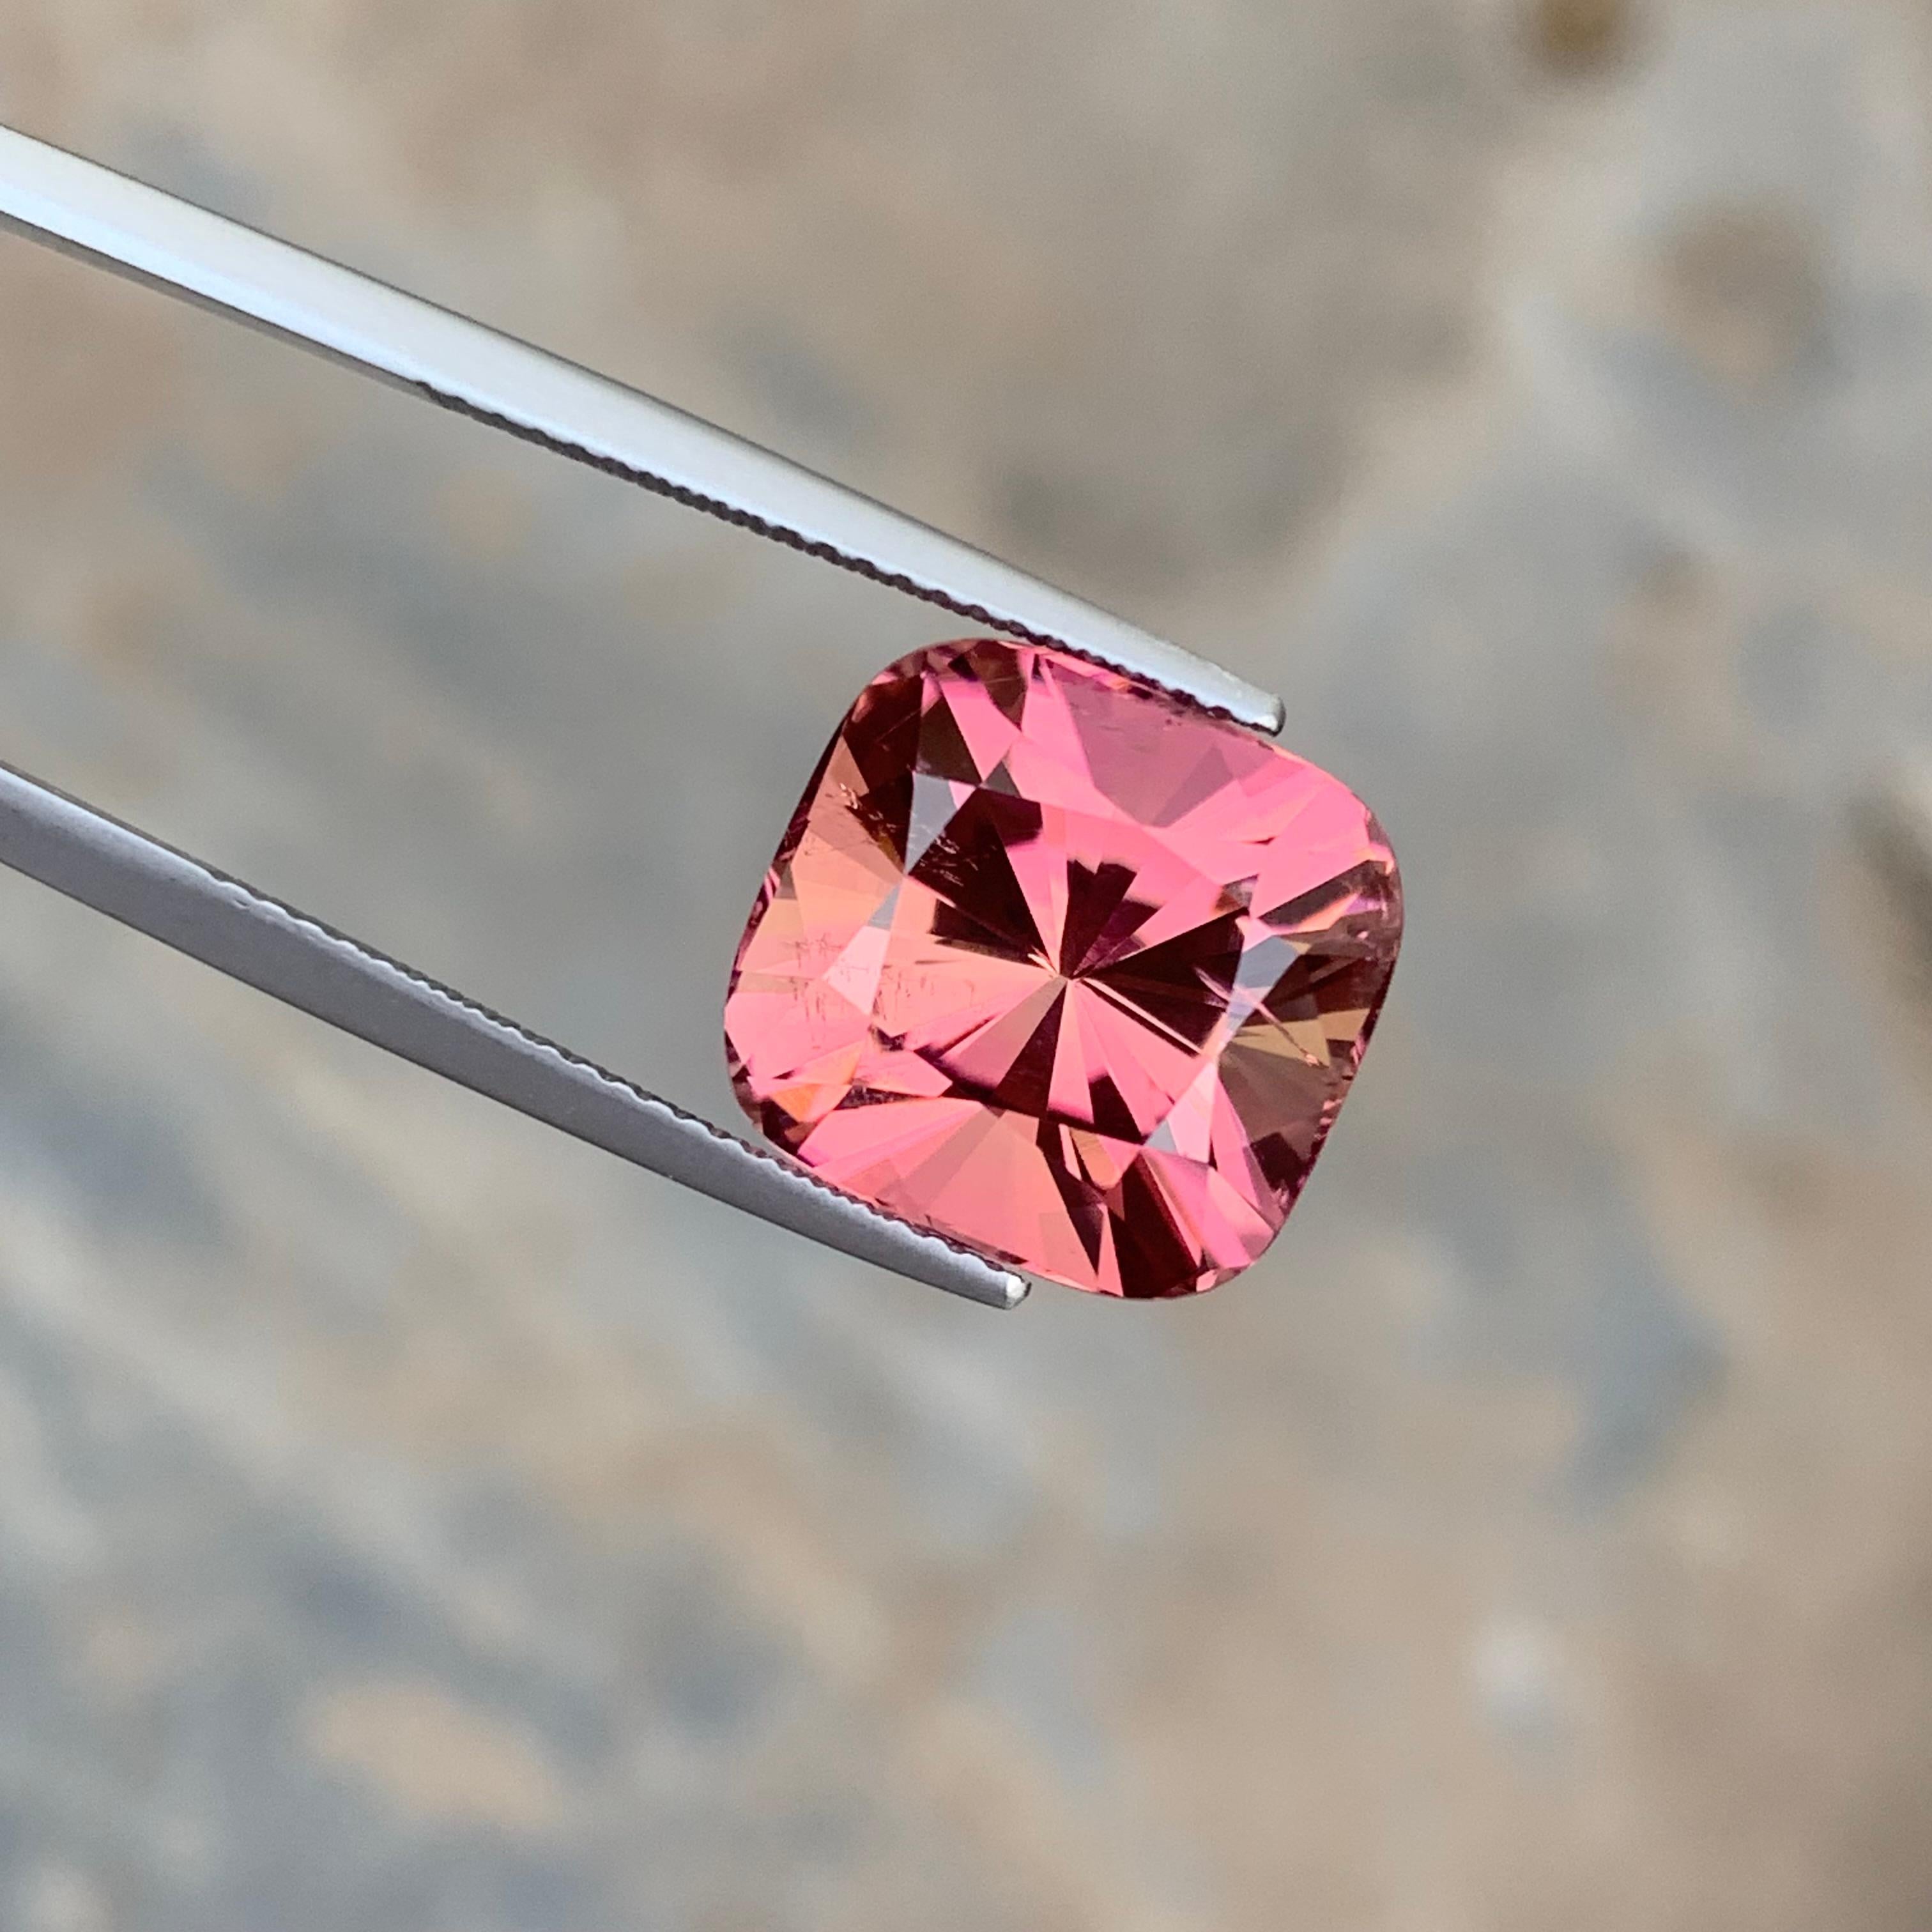 11.55 Carat Natural Loose Fancy Cut Pink Tourmaline Gemstone From Kunar Mine For Sale 3